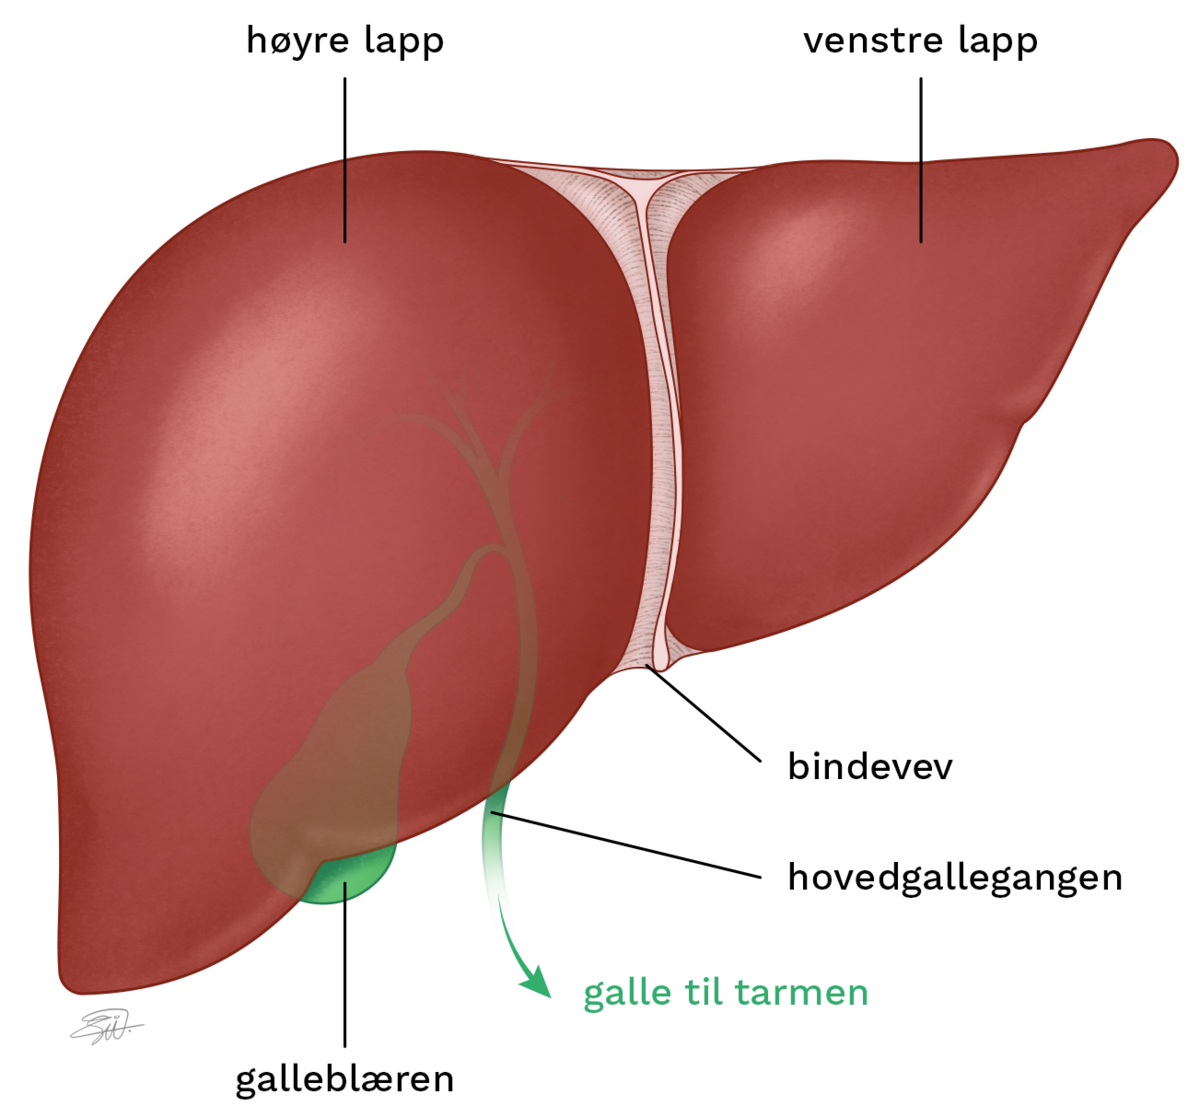 Leveren er et rødbrunt, trekantformet organ. Galleblæren er grønnfarget og ligger under leveren, nede til høyre.